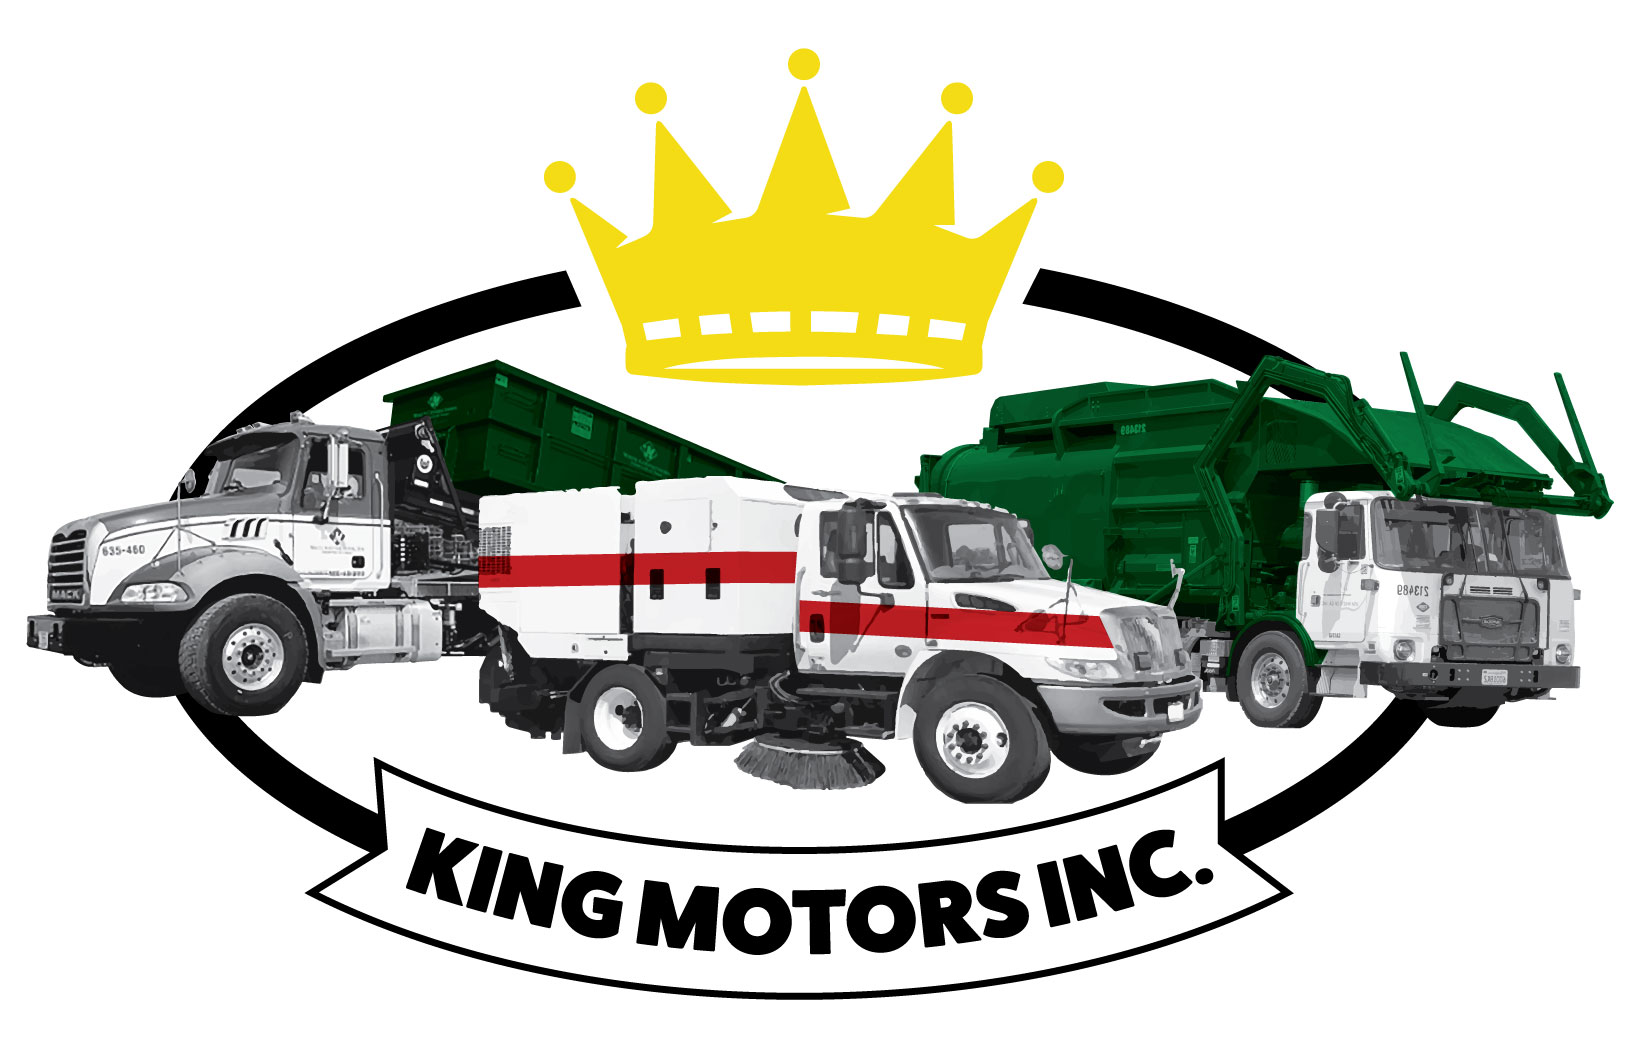 King Motors Inc.